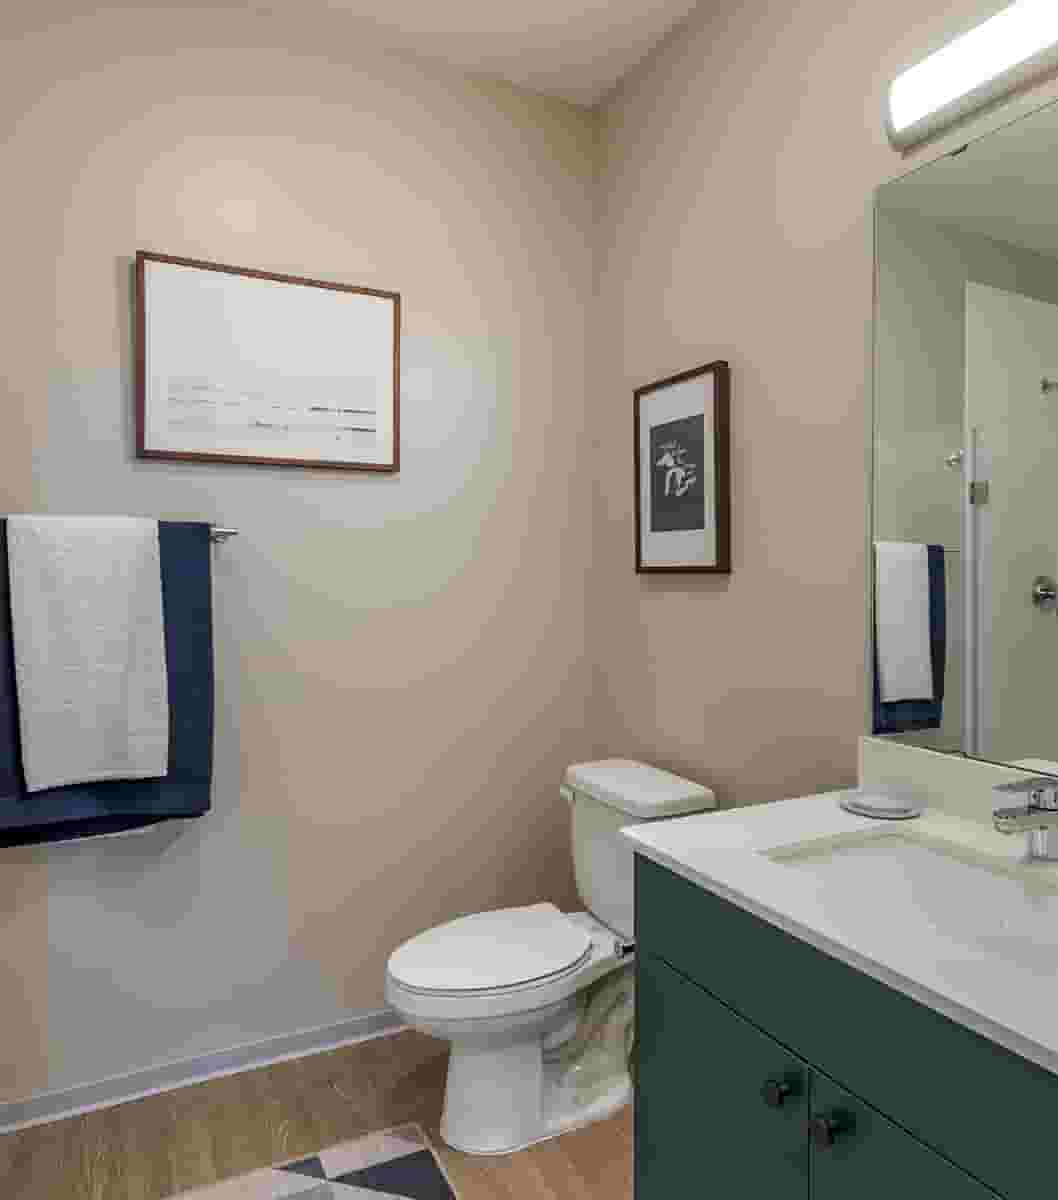 Private Student Bathroom in Minneapolis